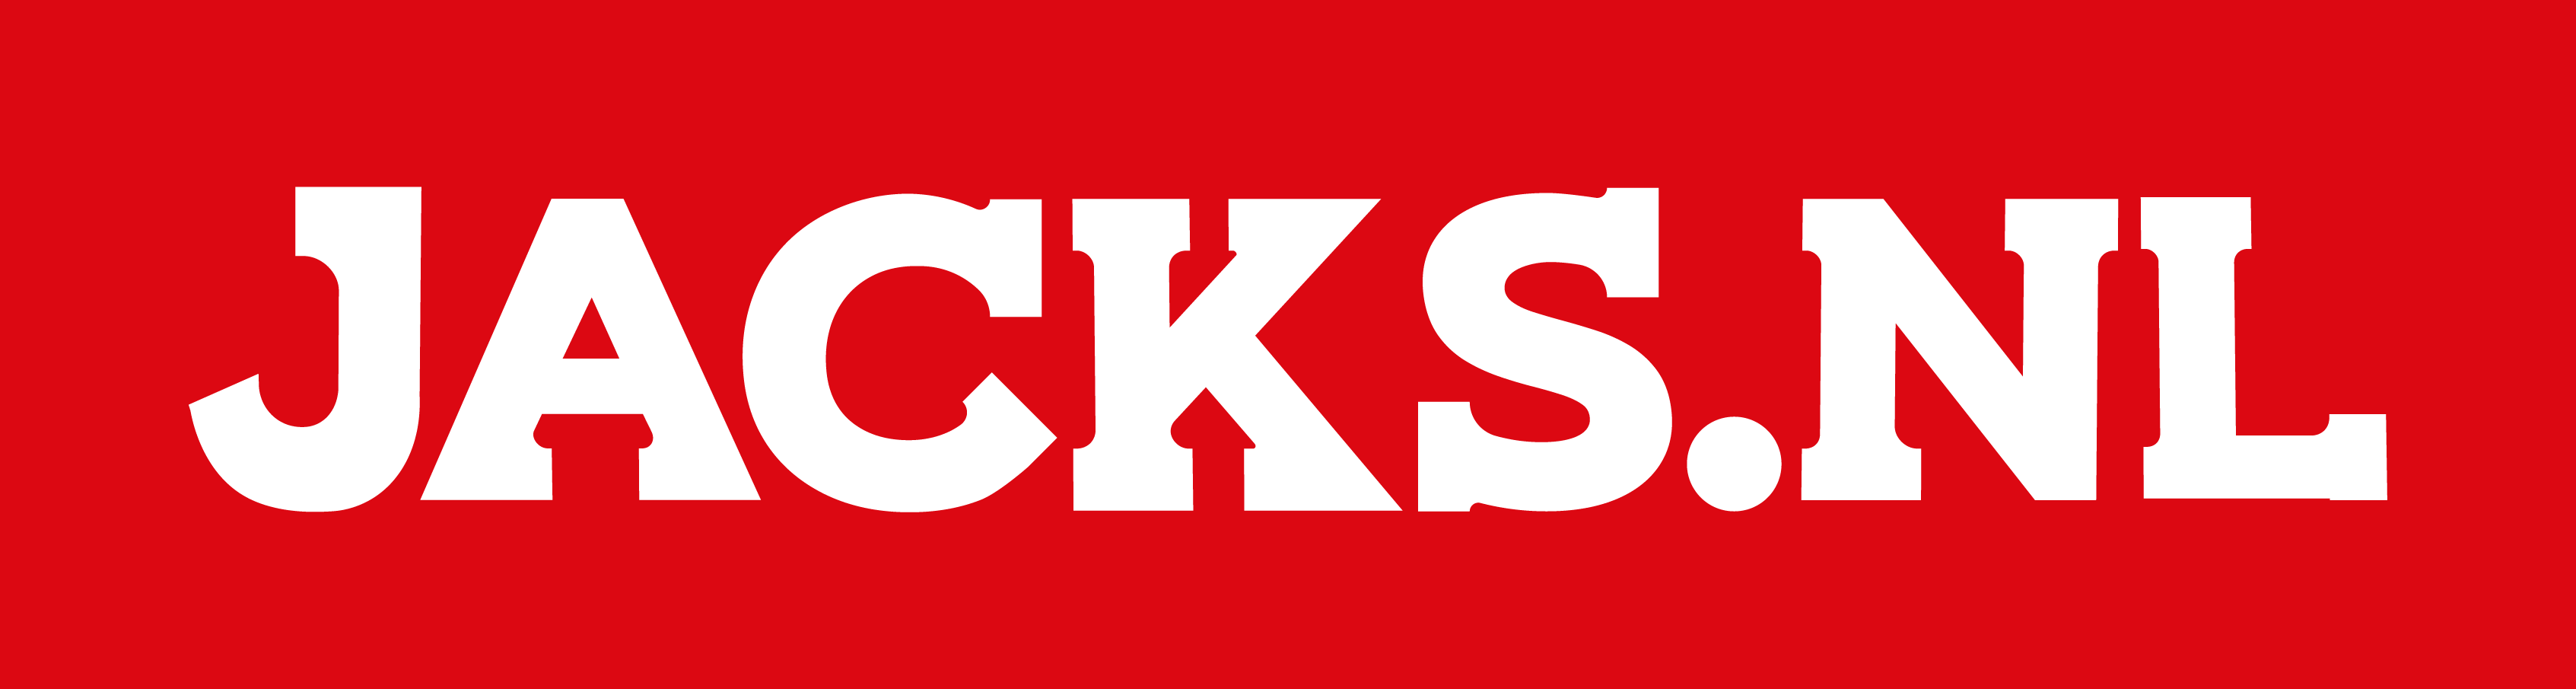 jackscasino-logo